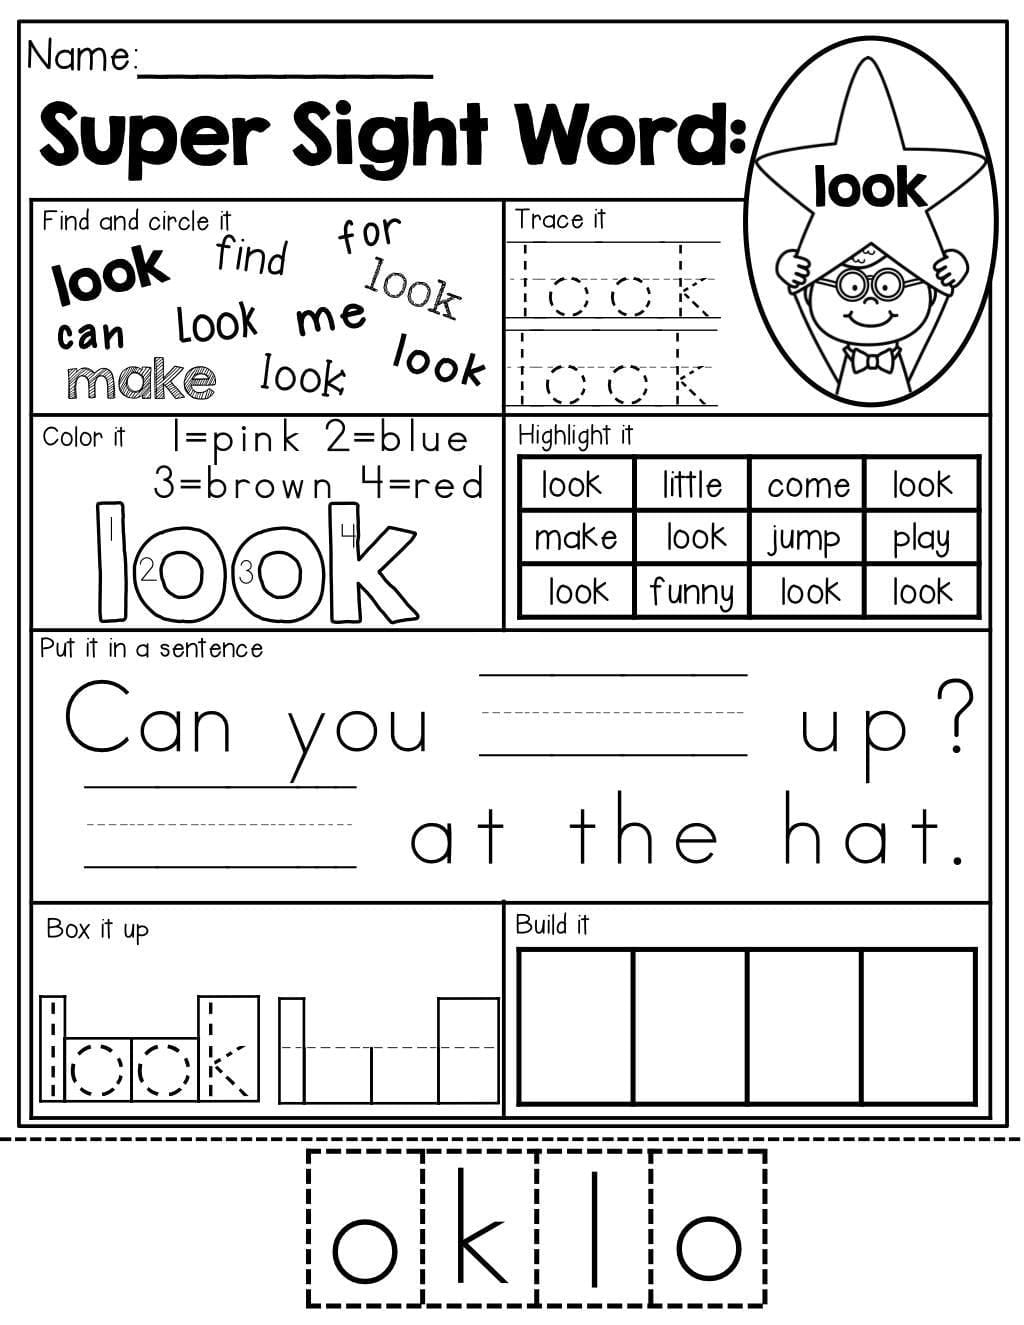 1st grade sight words worksheets